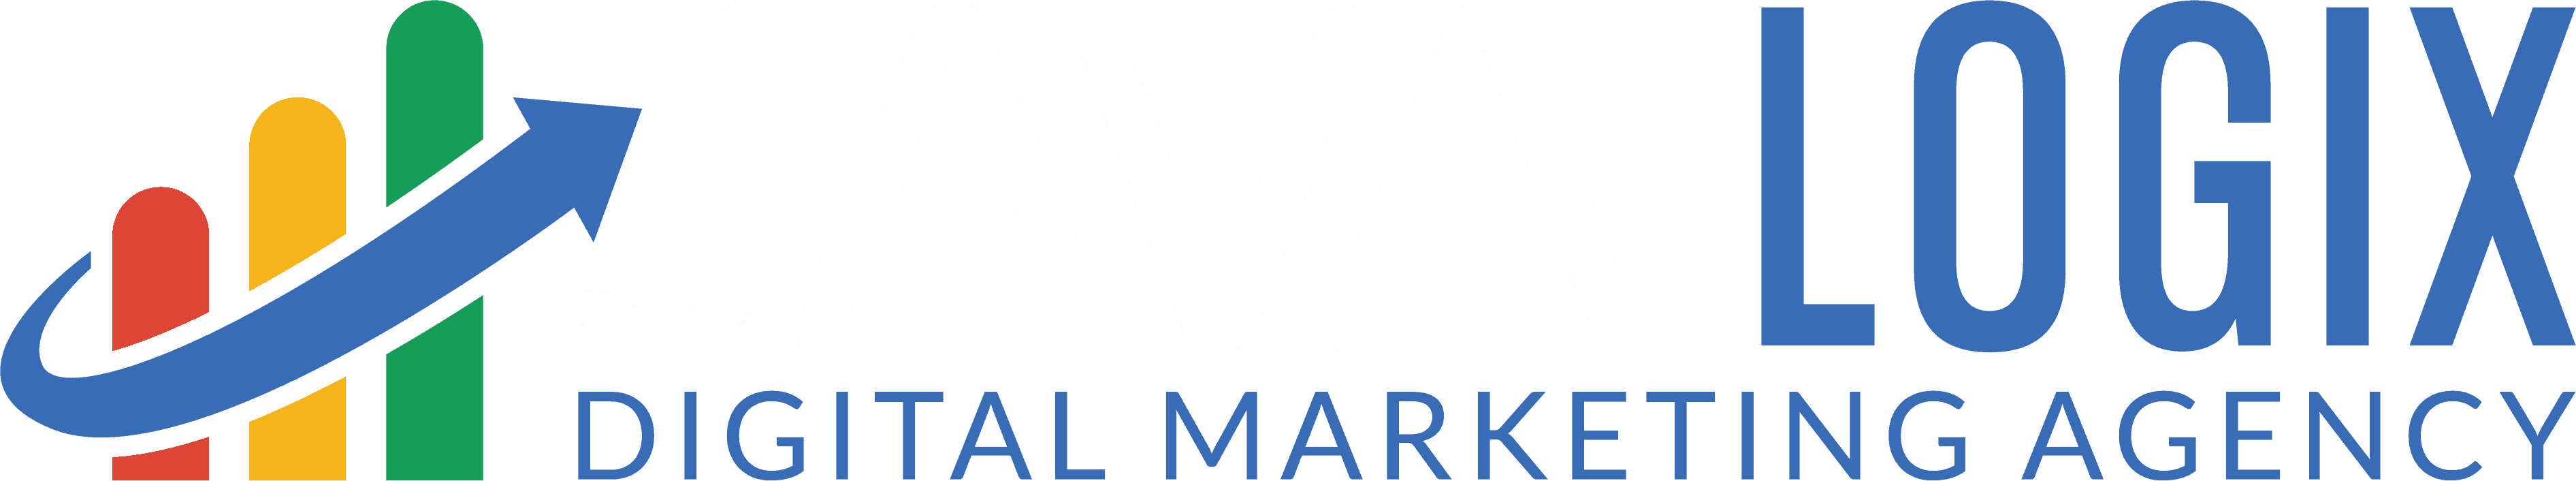 Java Logix Transparent Logo wht